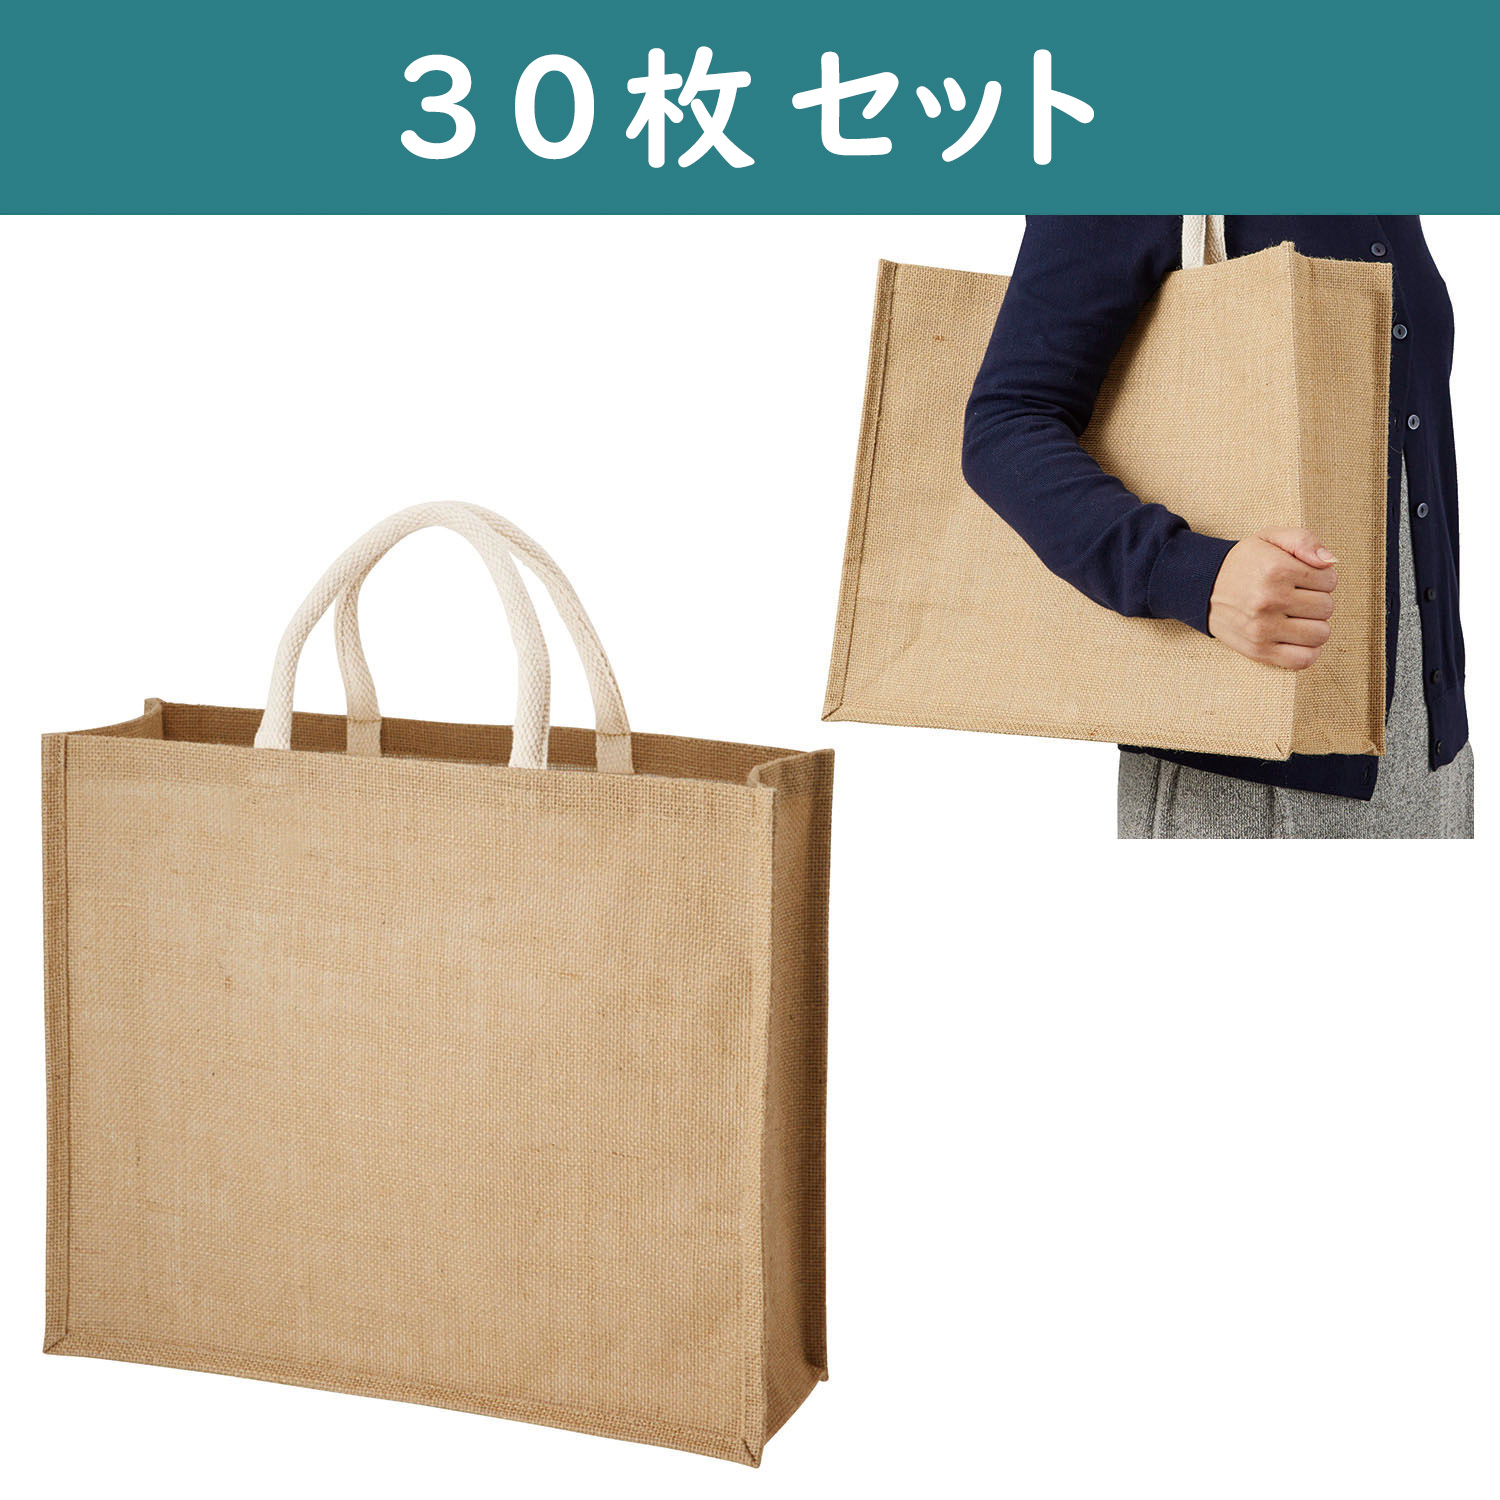 ES319-30 Jute Square bag Natural beige (Large size) 30pcs set (set)